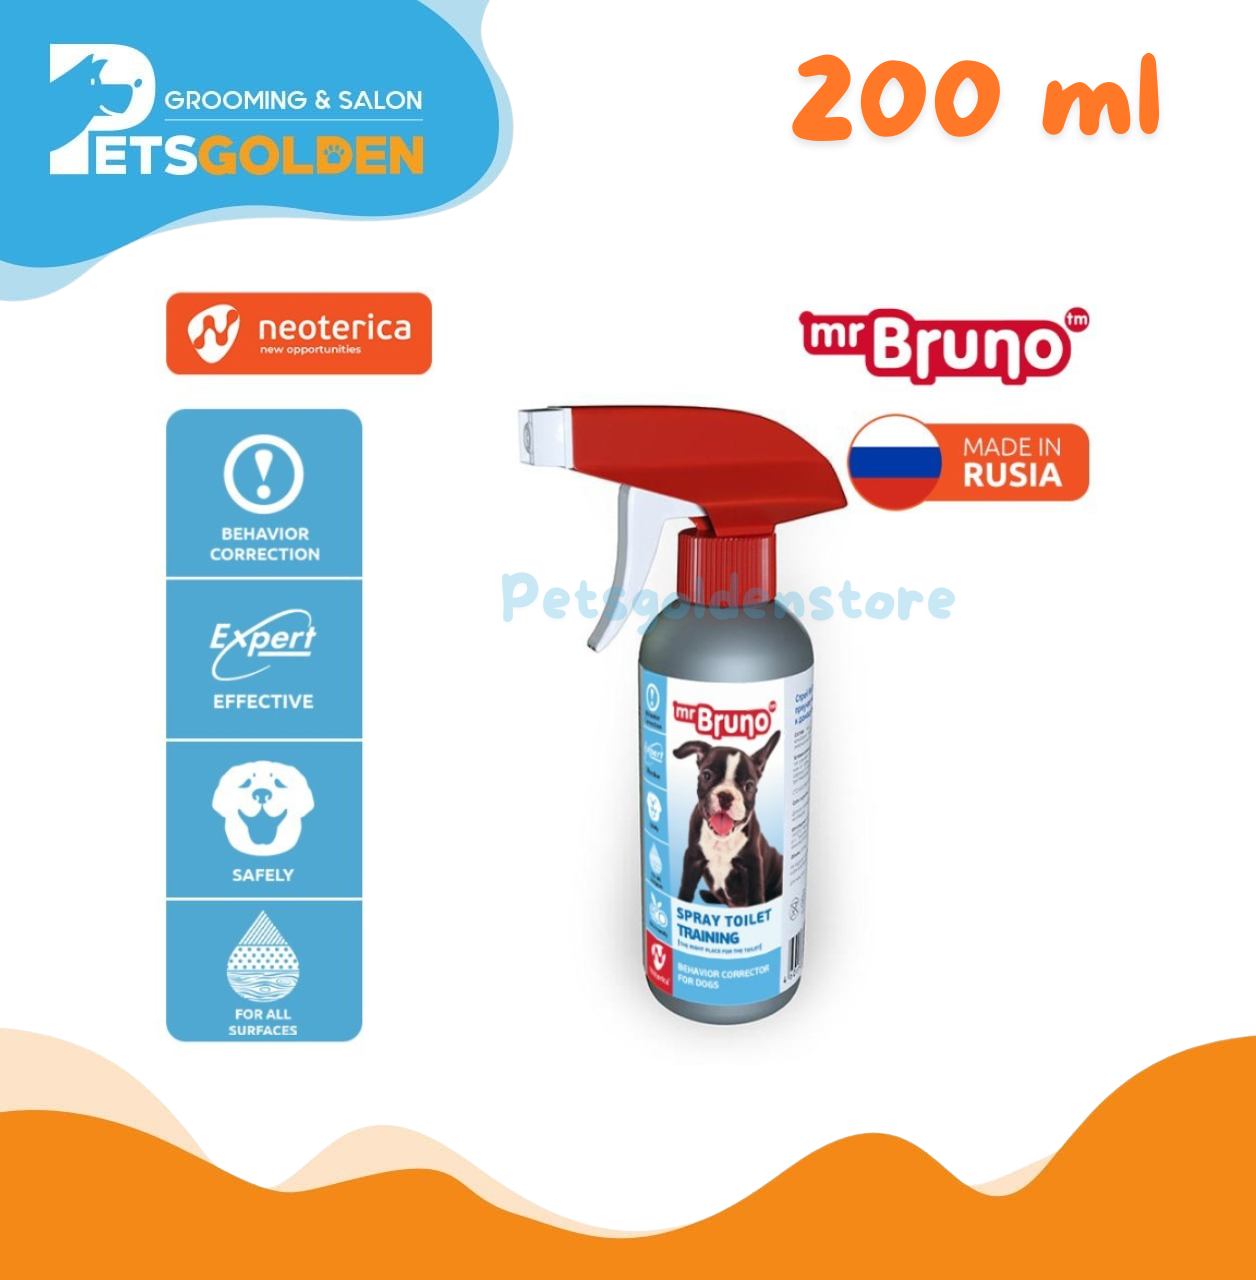 Mr Bruno Spray Toilet Training For Dogs 200 Ml